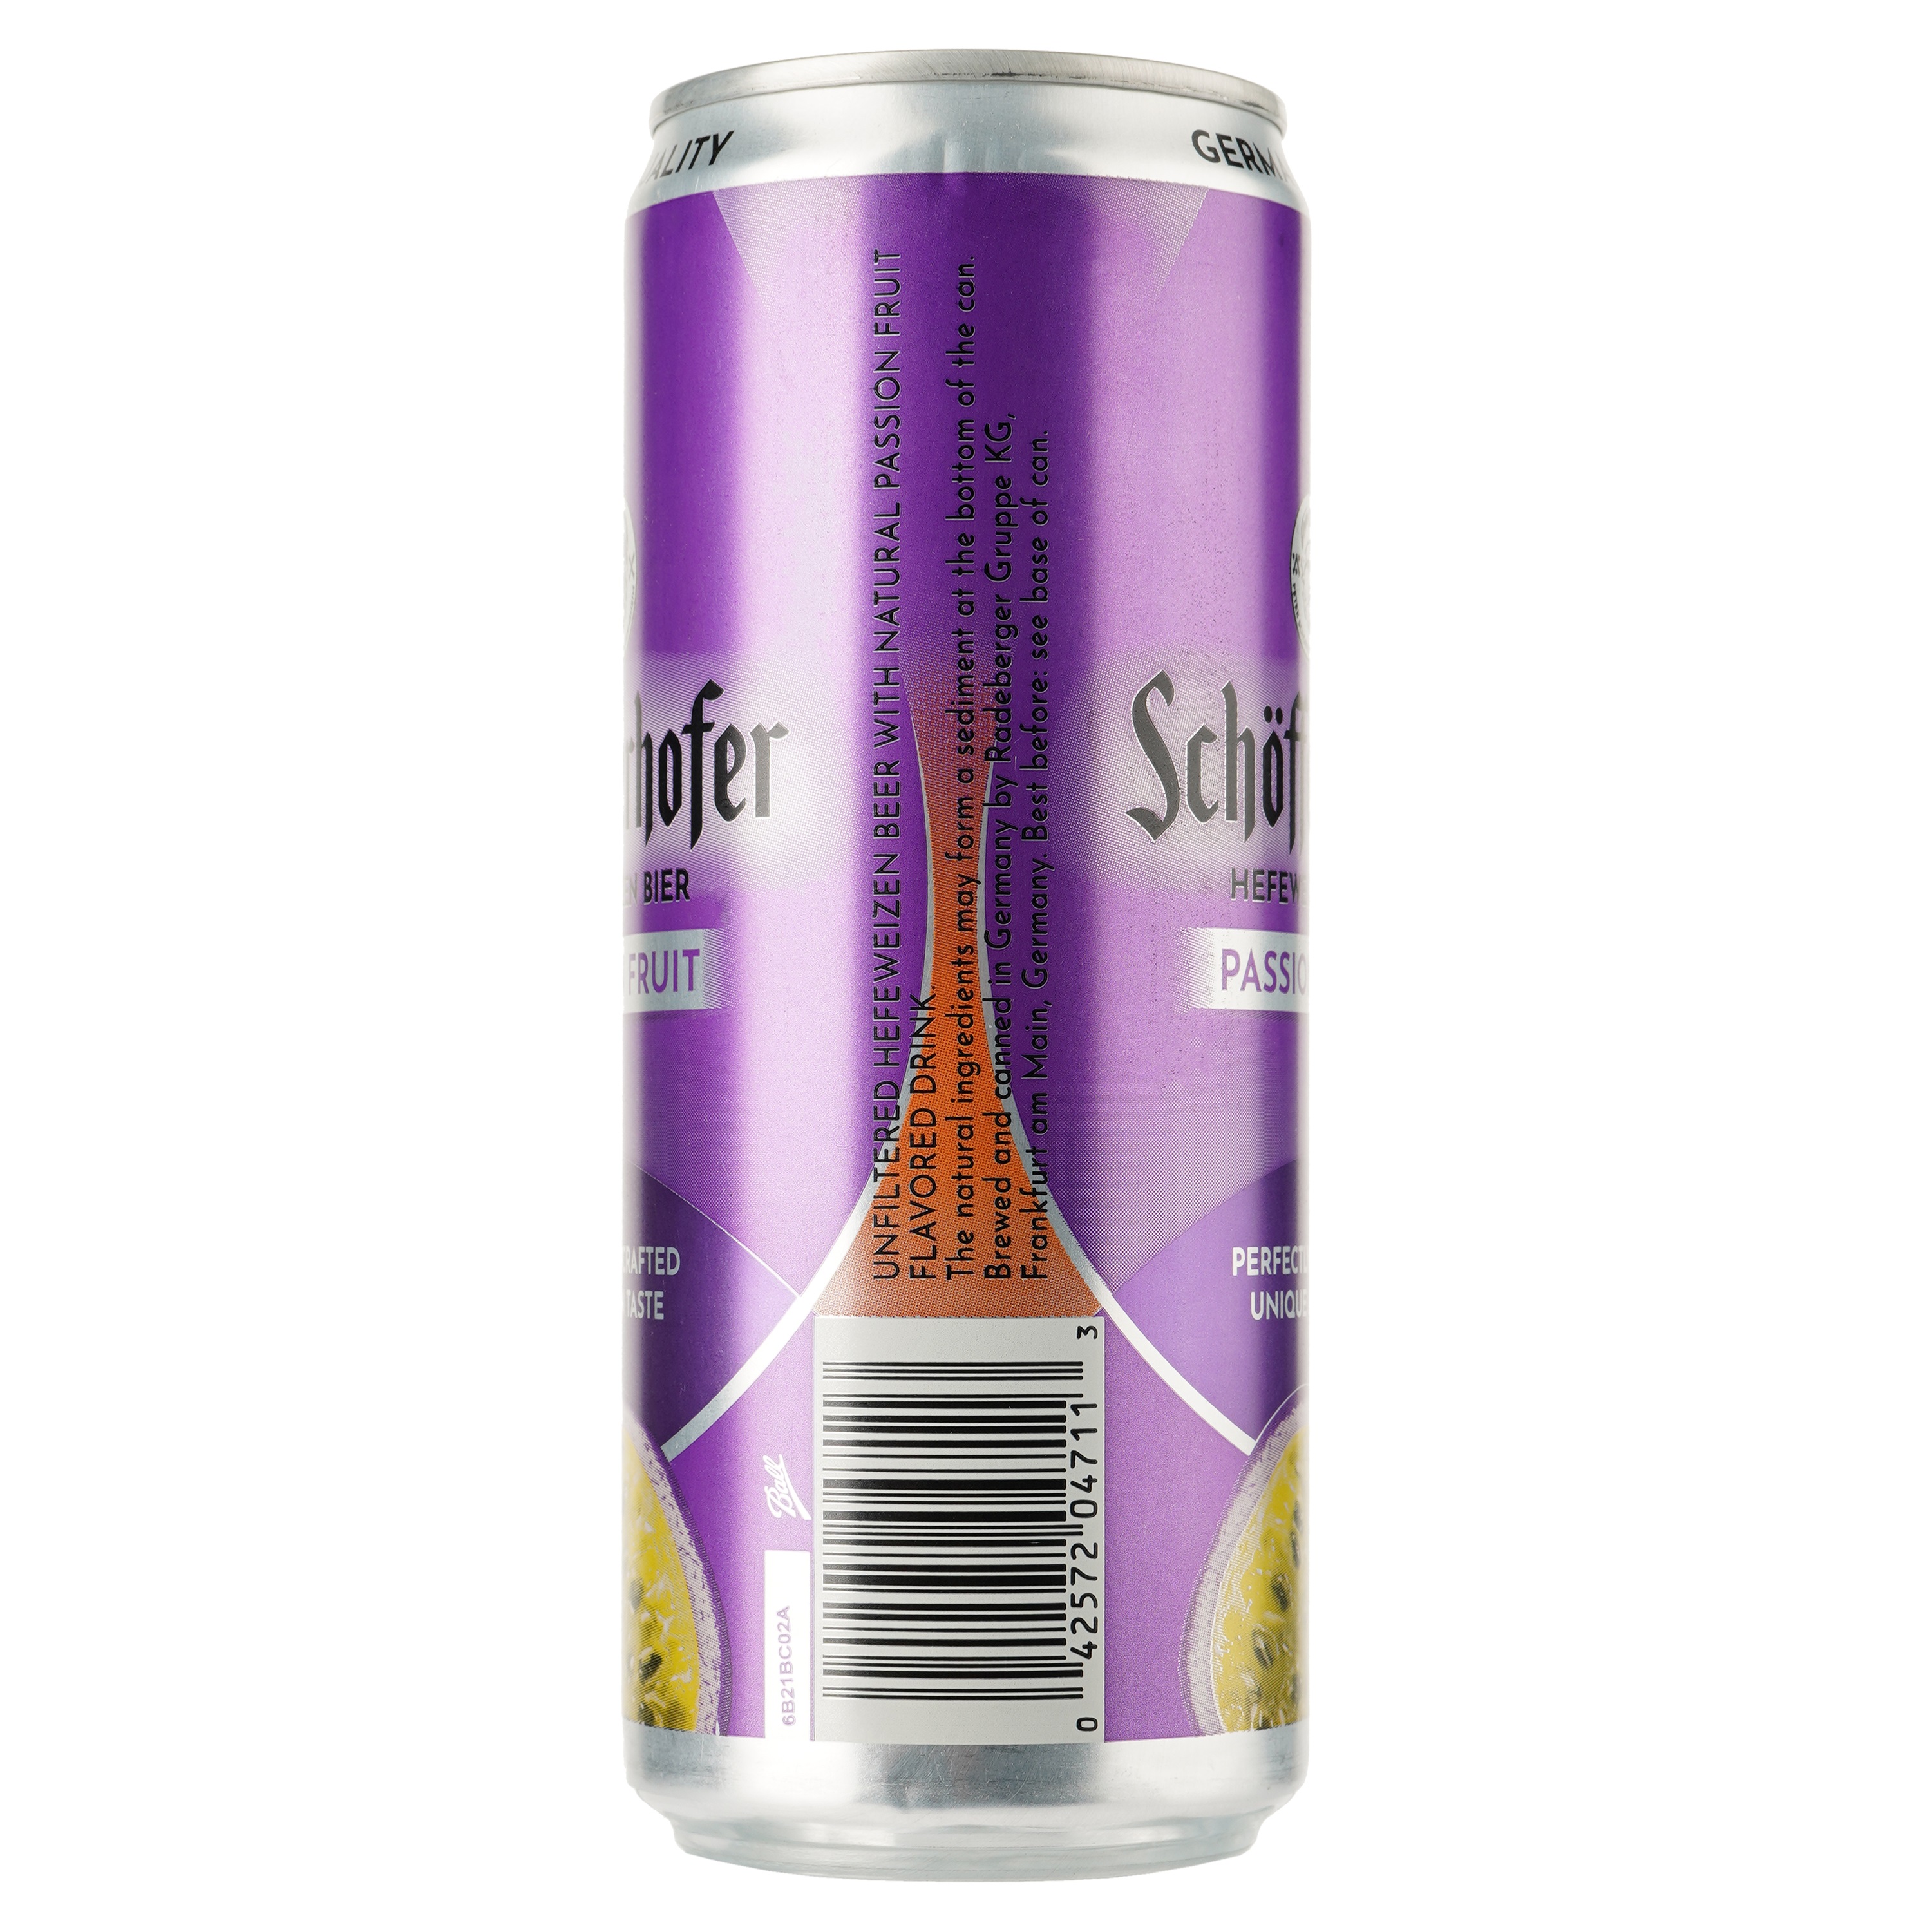 Пиво Schofferhofer Passion Fruit світле нефільтроване з соком, 2.5%, з/б, 0.33 л - фото 2